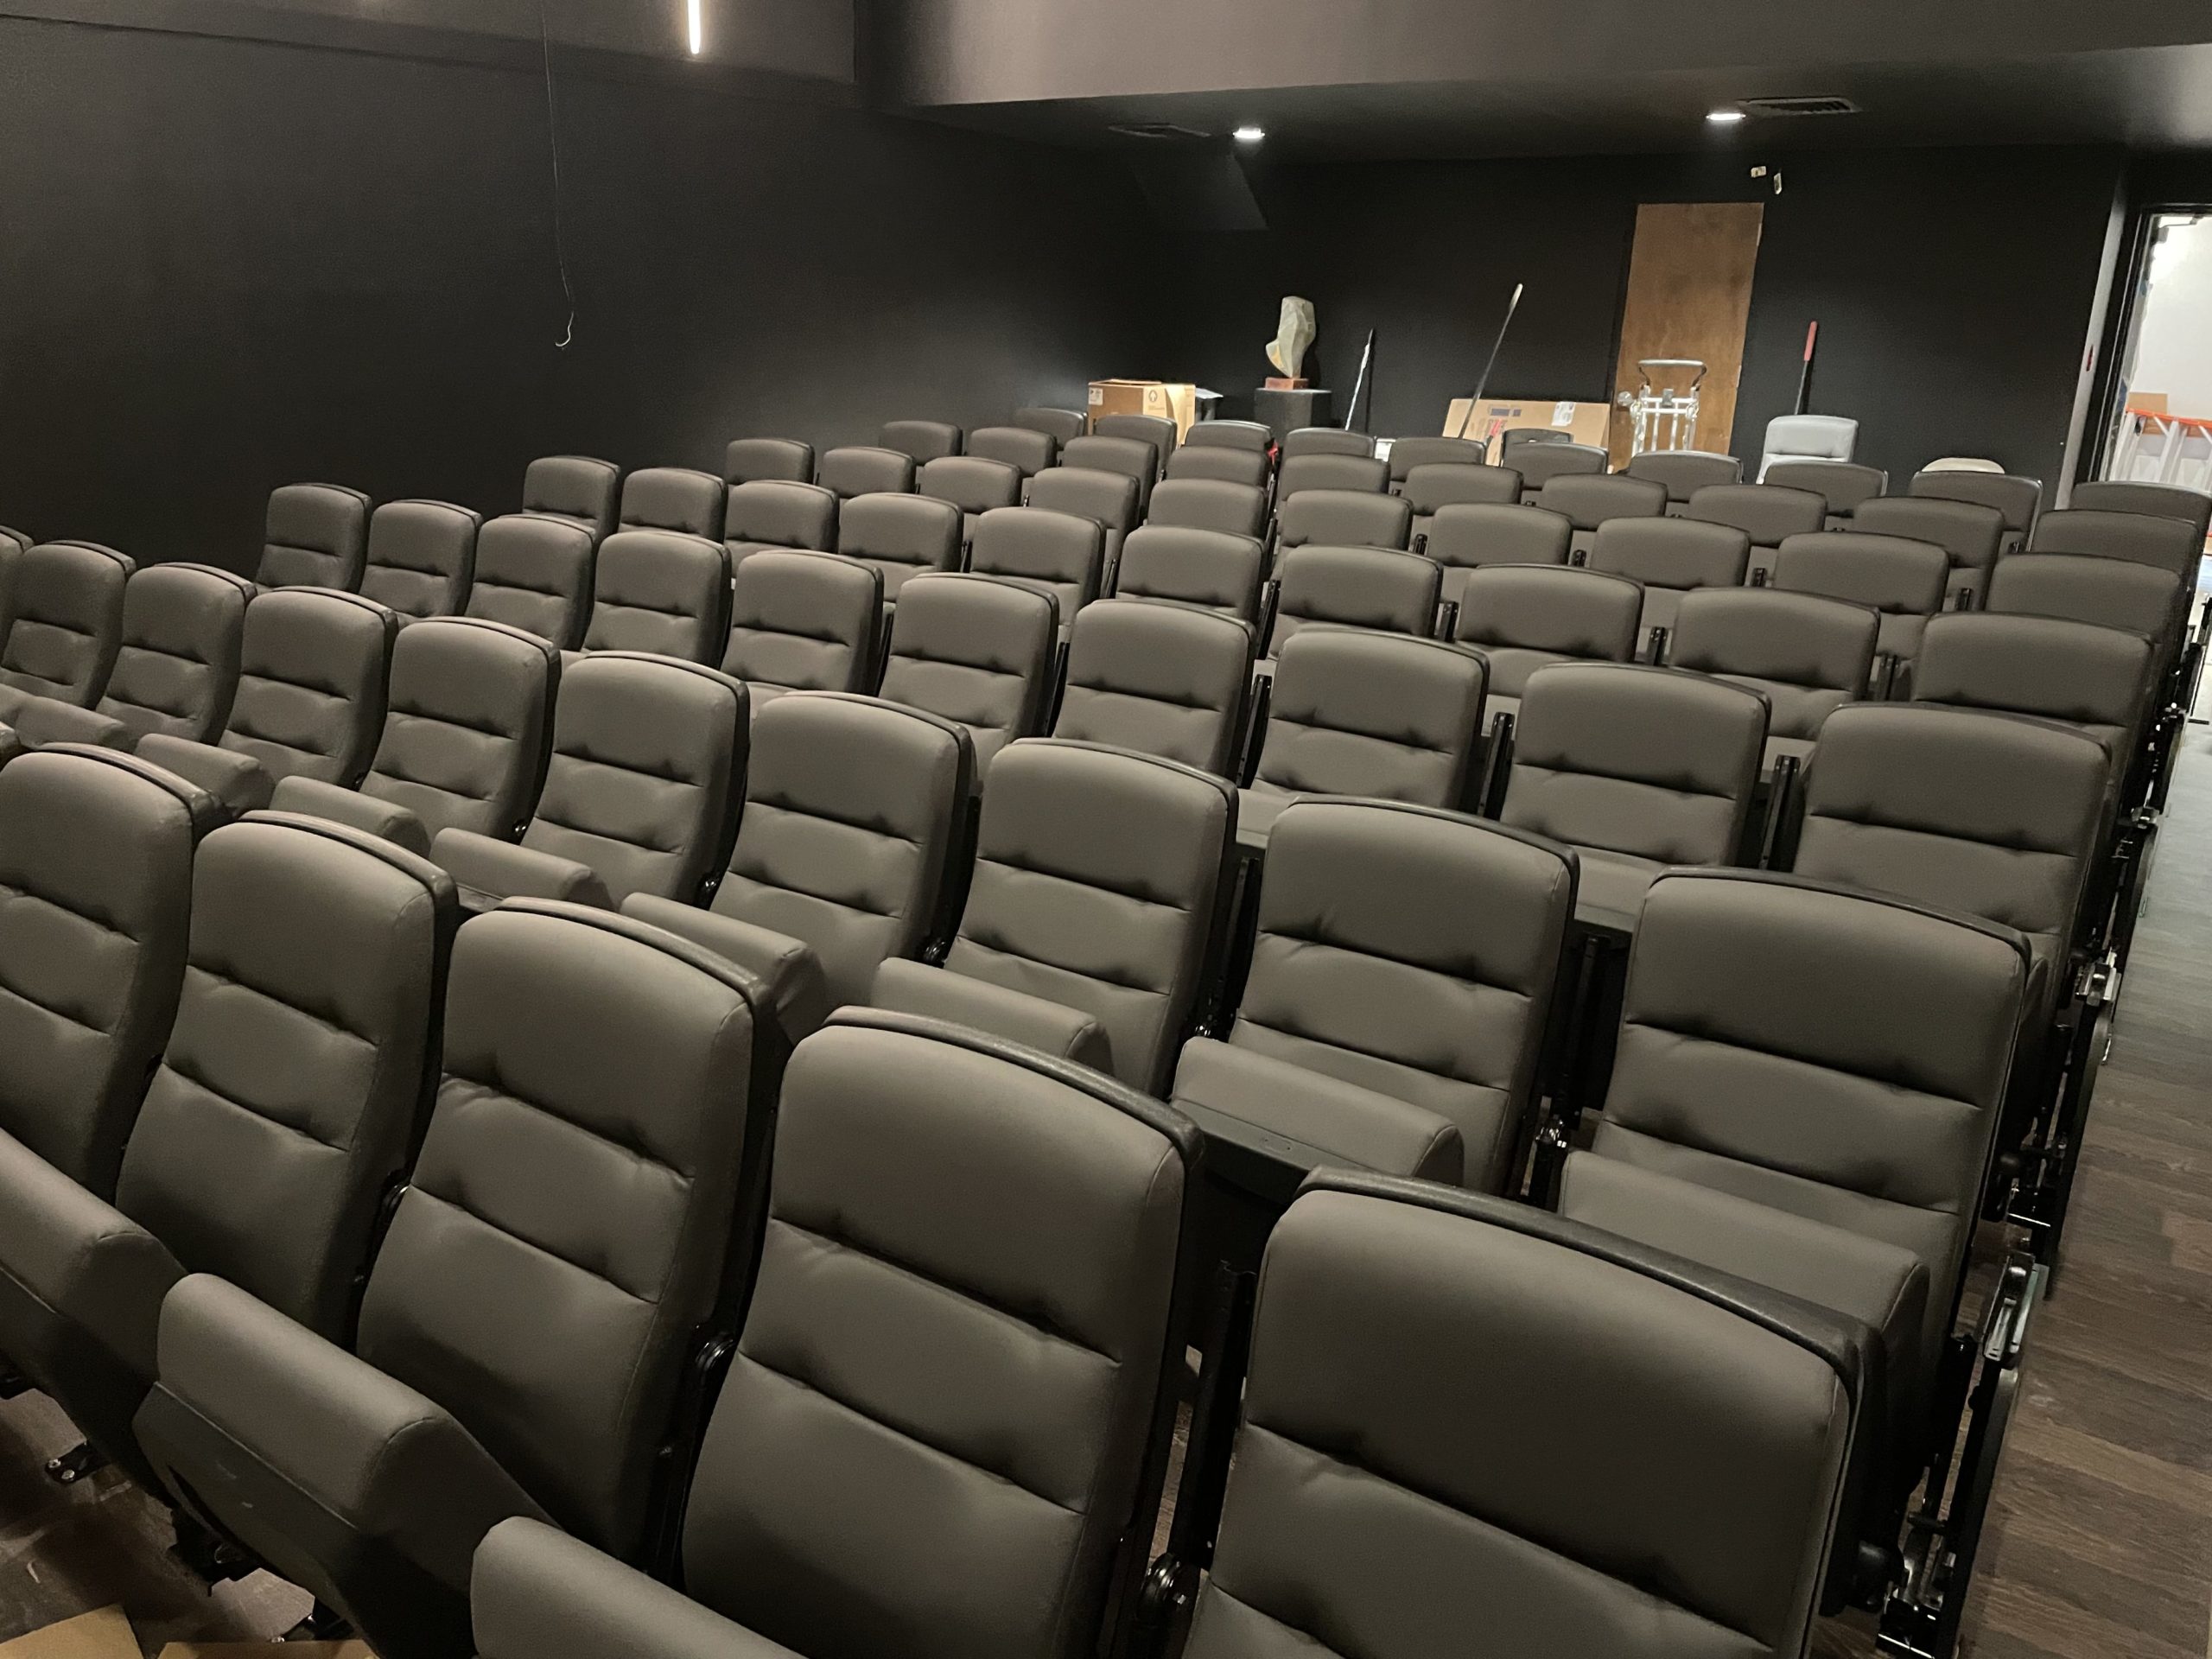 Cinema 2 Seat installation